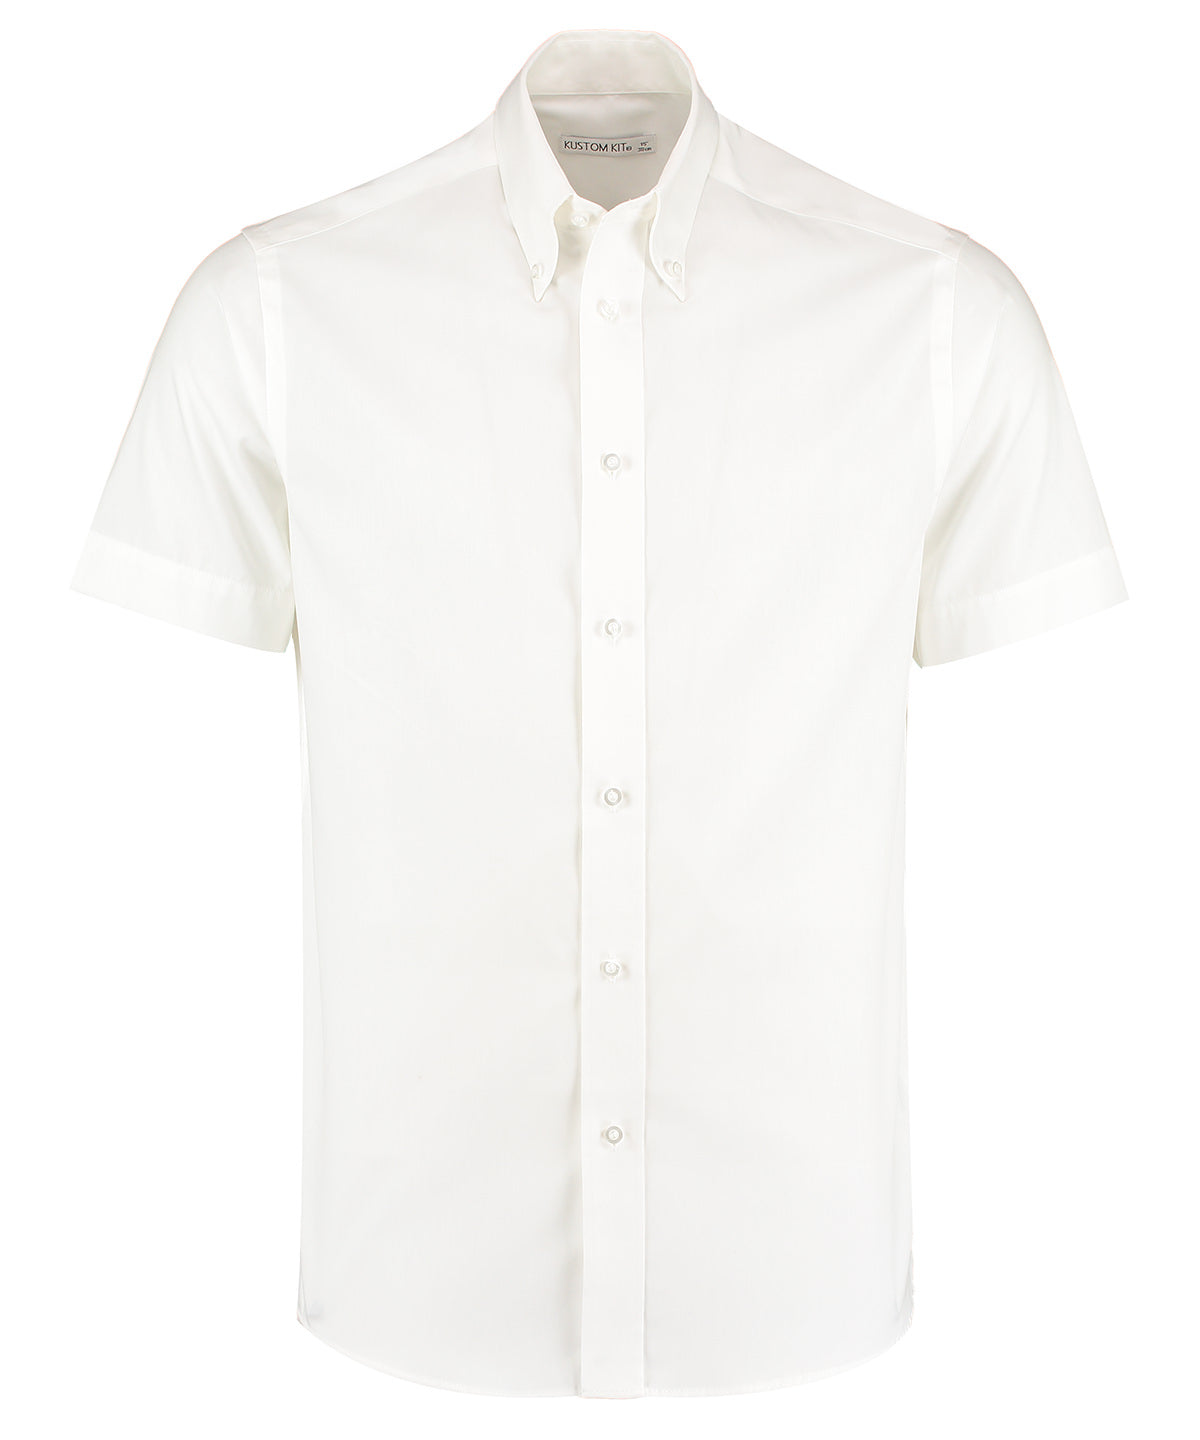 Bolir - Premium Oxford Shirt Short-sleeved (tailored Fit)